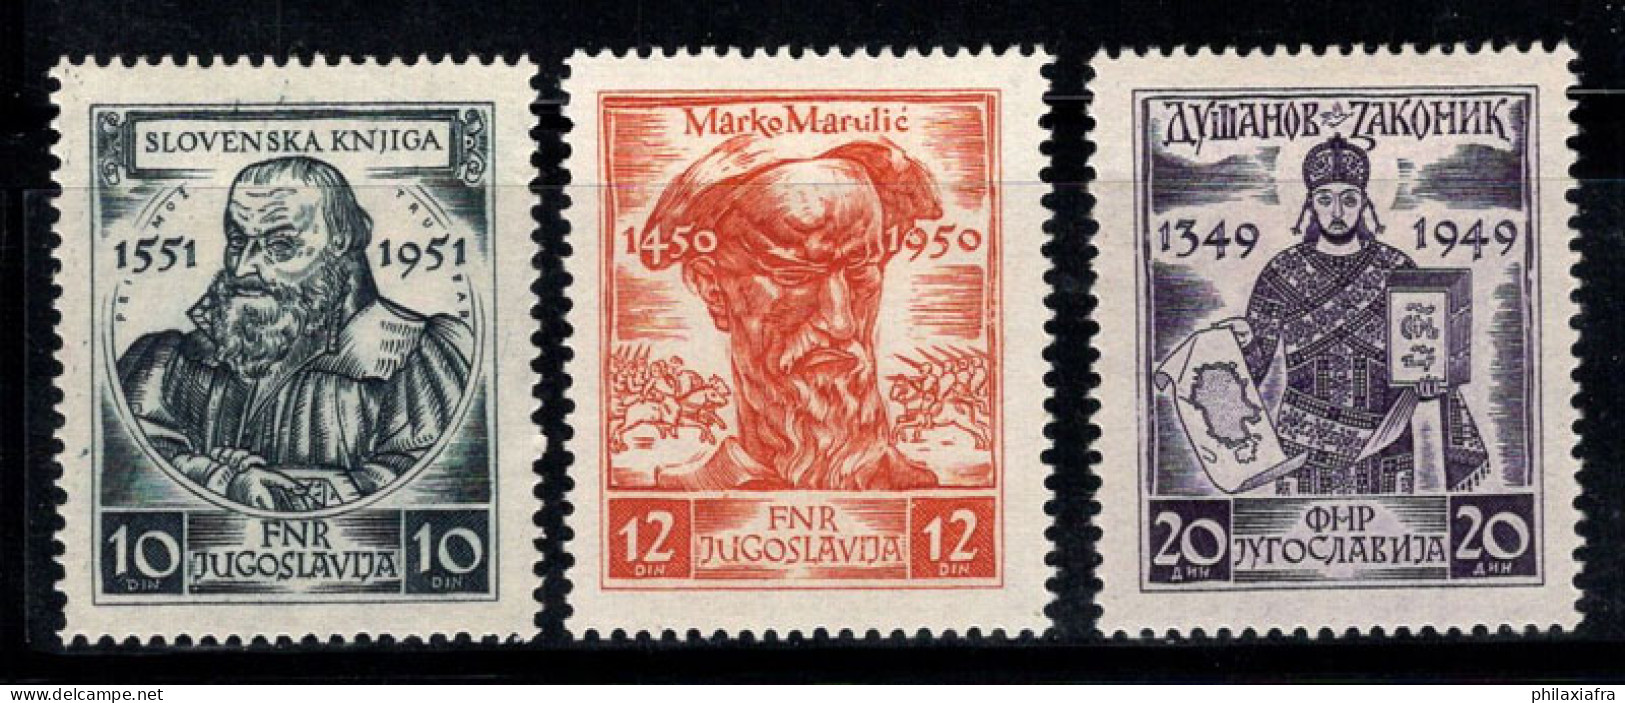 Yougoslavie 1951 Mi. 668-670 Neuf * MH 80% Écrivains Médiévaux - Ungebraucht